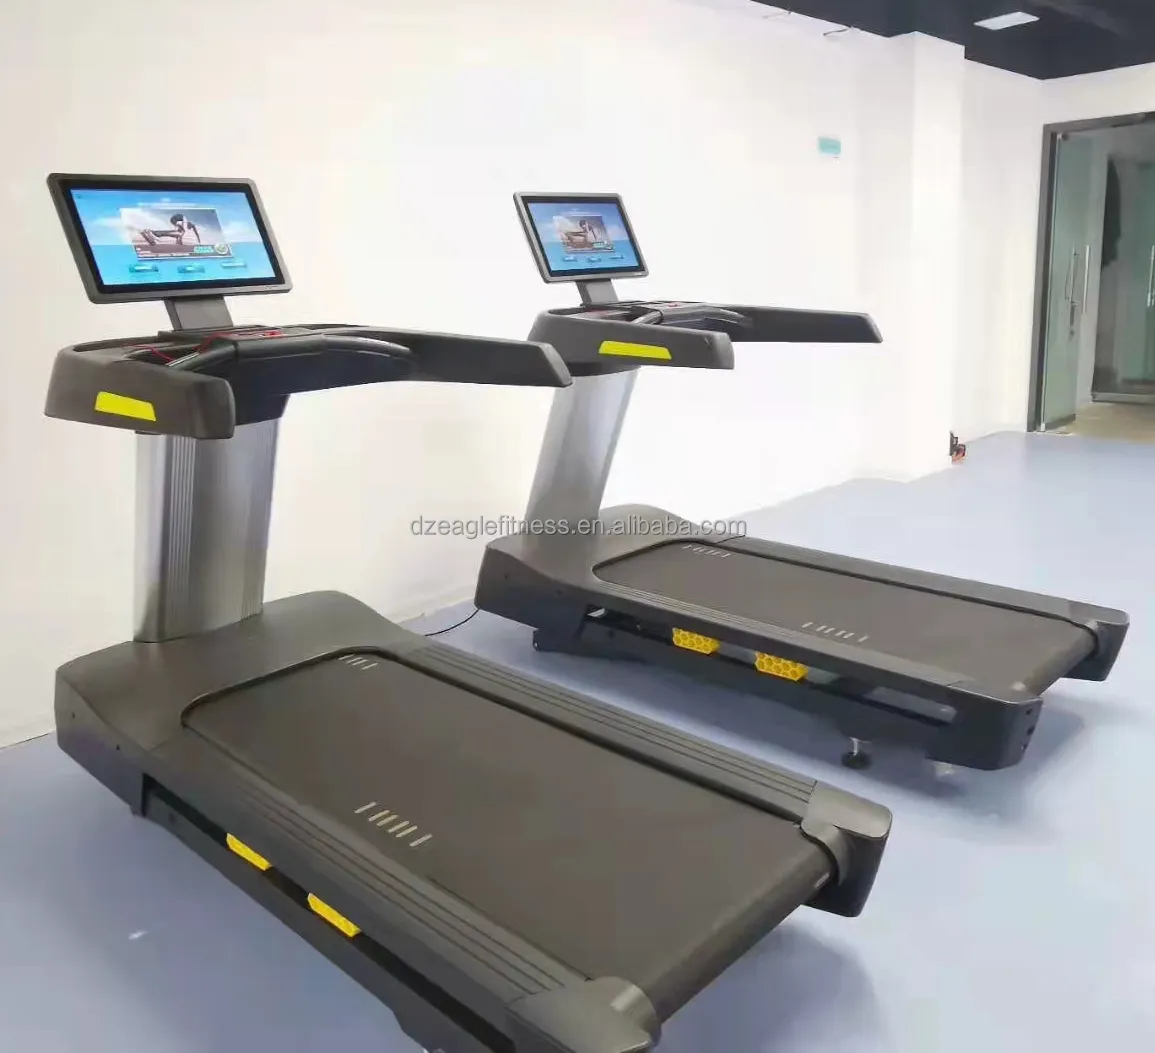 Alat Fitness Gym Treadmill Komersial/Mesin Berjalan